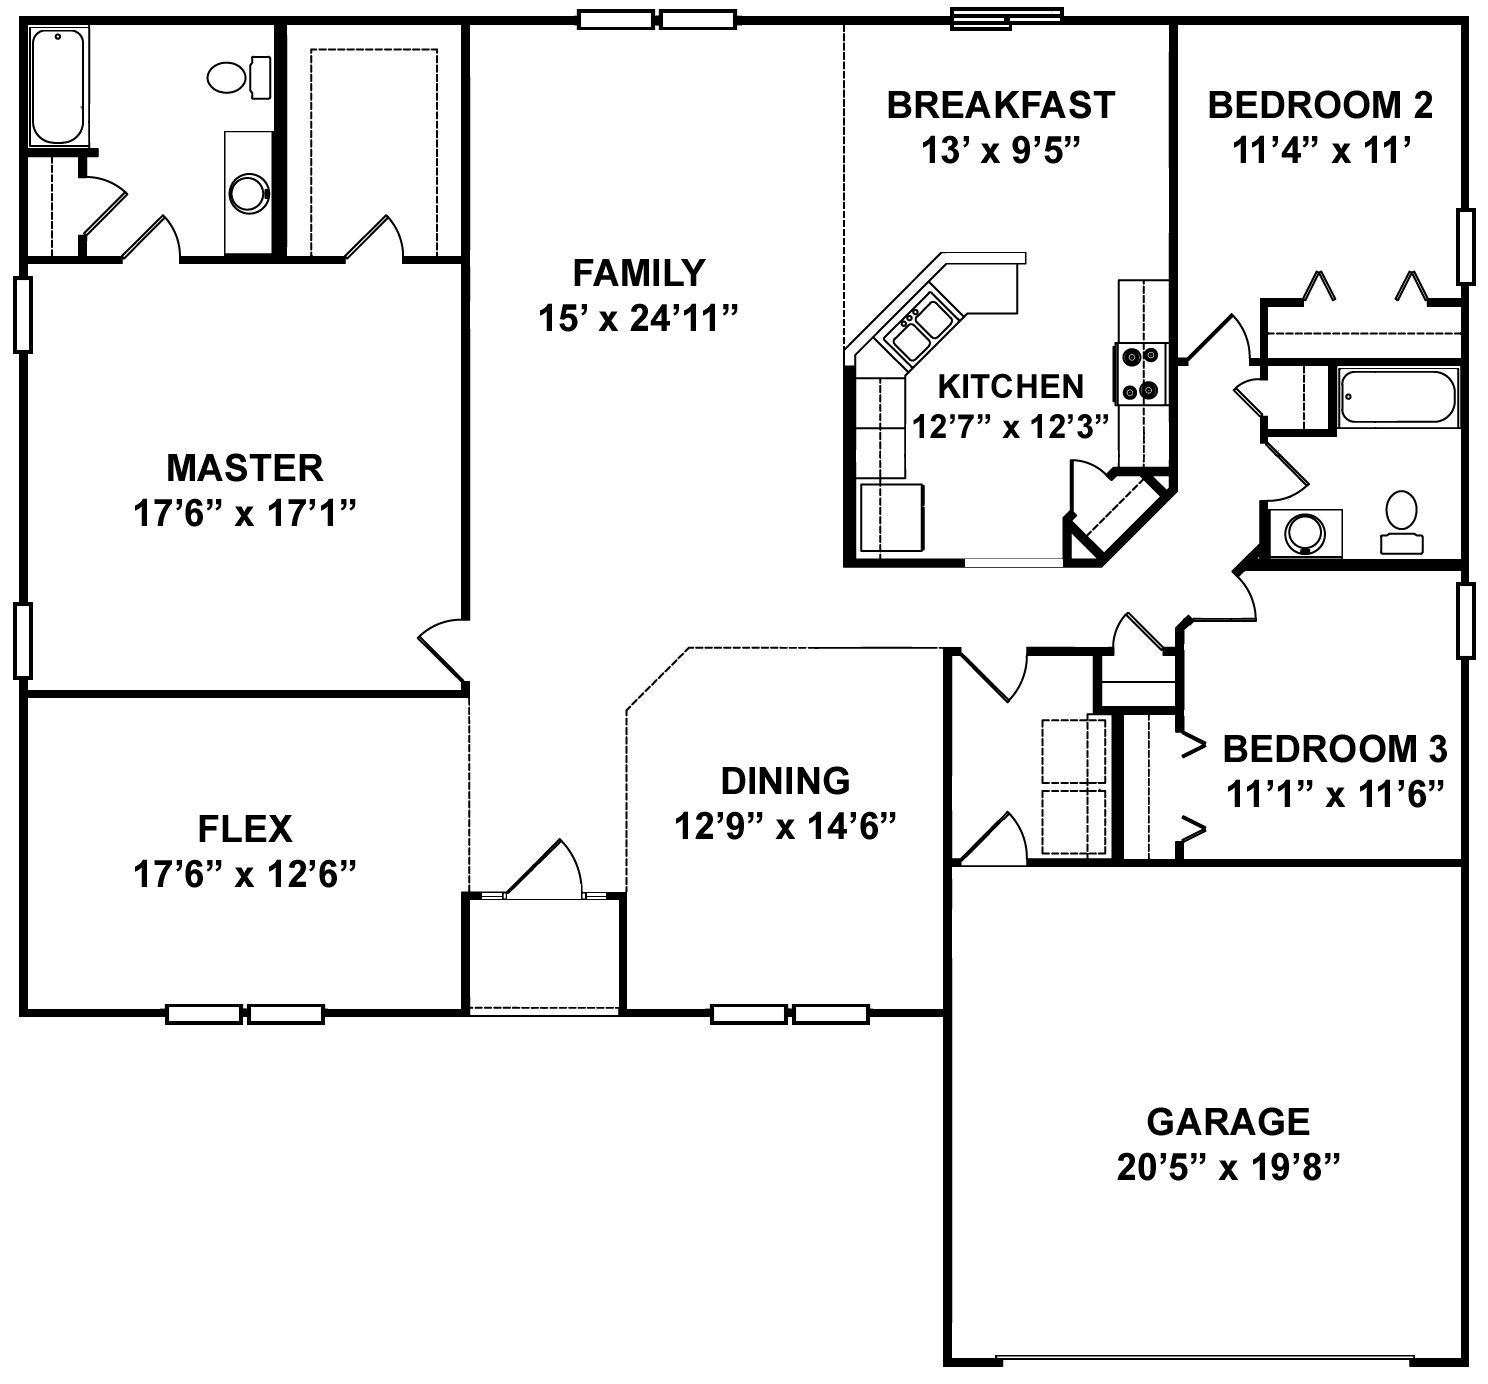 Standard Bedroom Dimensions
 Cute master bedroom suite layout ideas